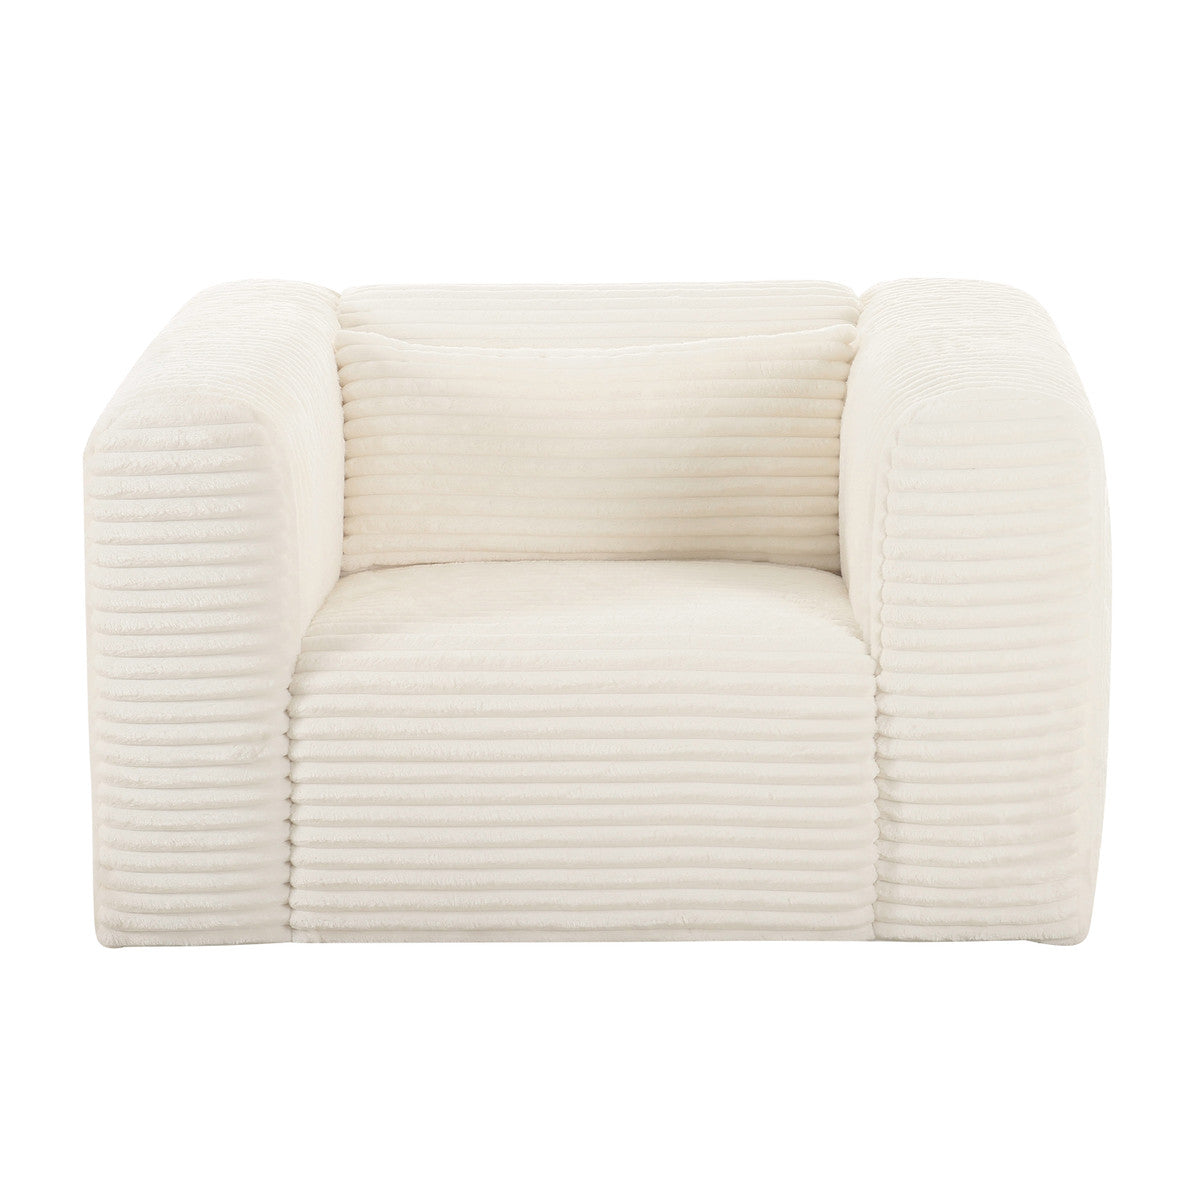 Telav Fluffy Oversized Cream Corduroy Armchair